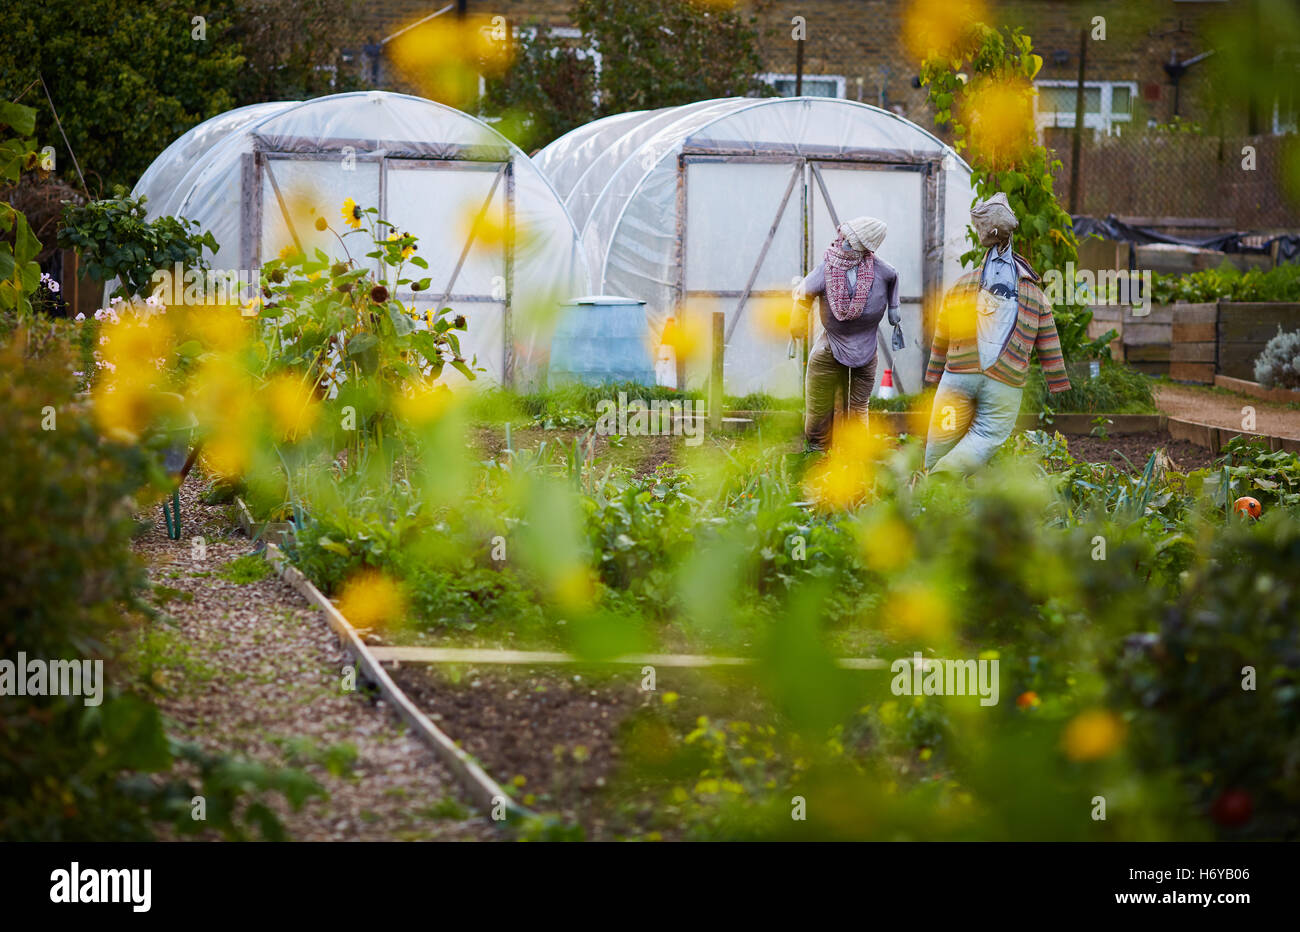 Schule Zuteilung Hammersmith London Gartenraum Obstbau Blumen Pflanzen Gemeinschaft im Garten plane Platten Hütten Betten p Stockfoto